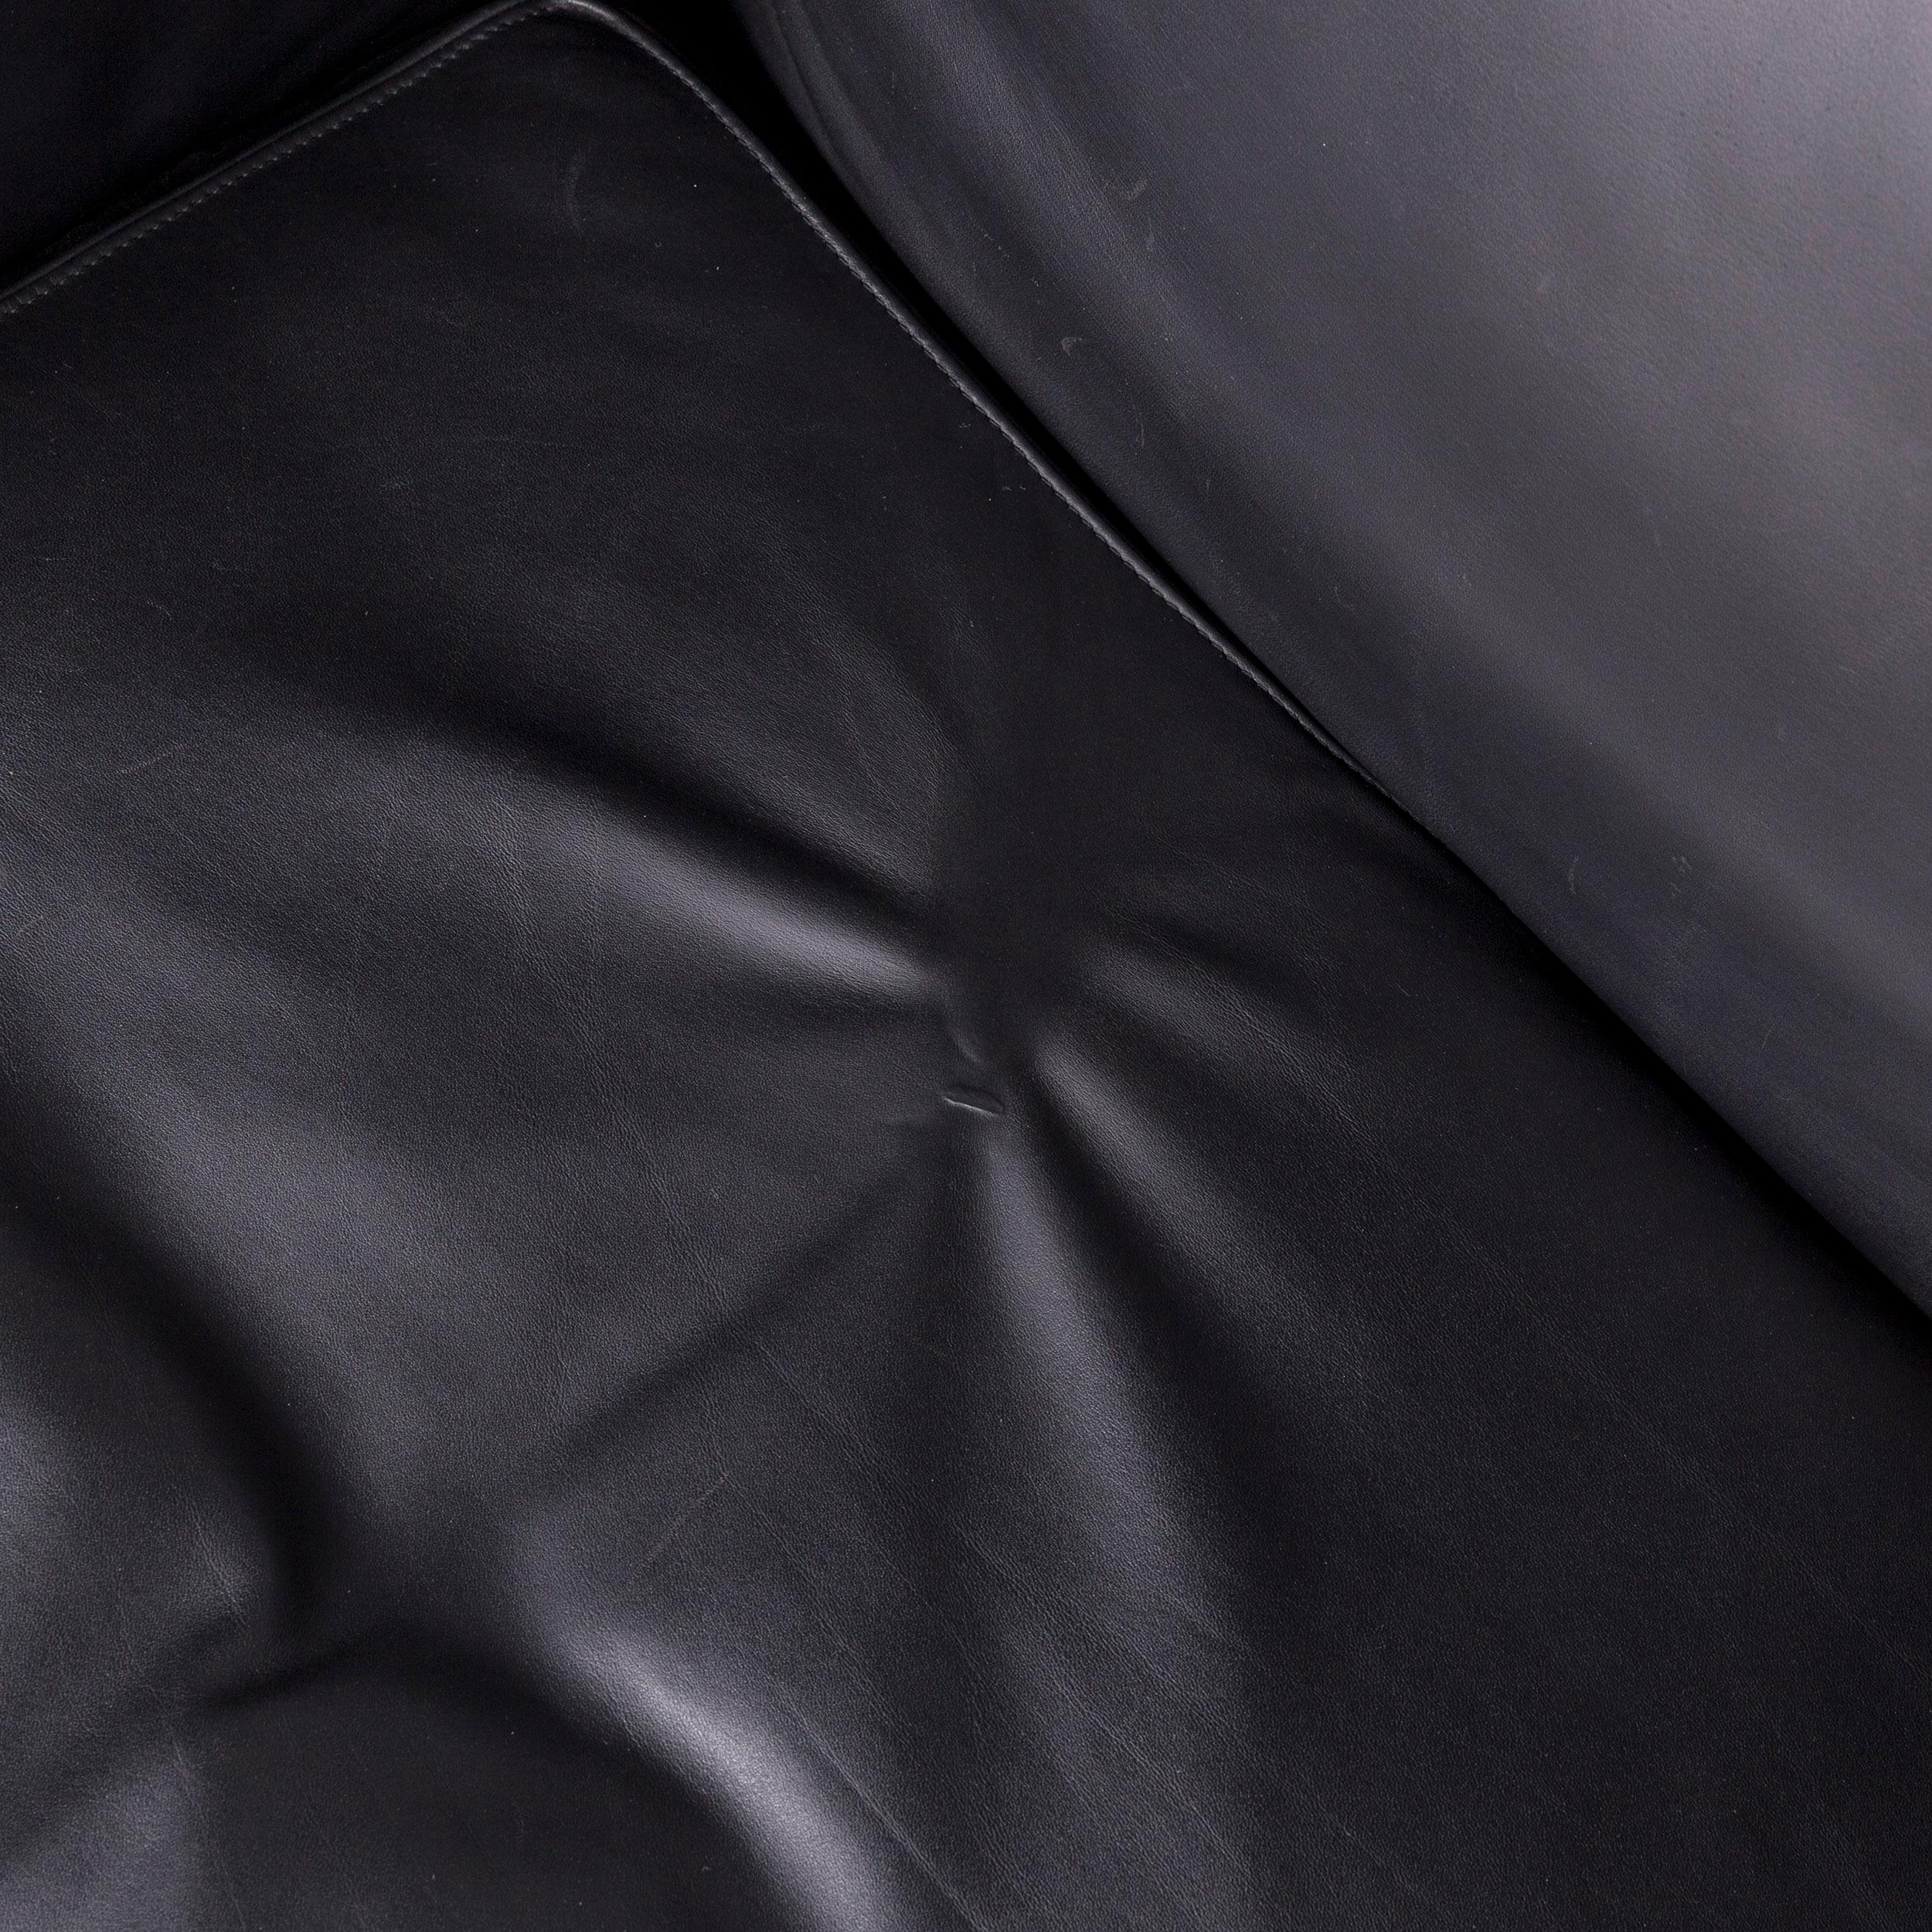 Poltrona Frau Socrate Designer Leather Sofa Set Black Genuine Leather Two 9